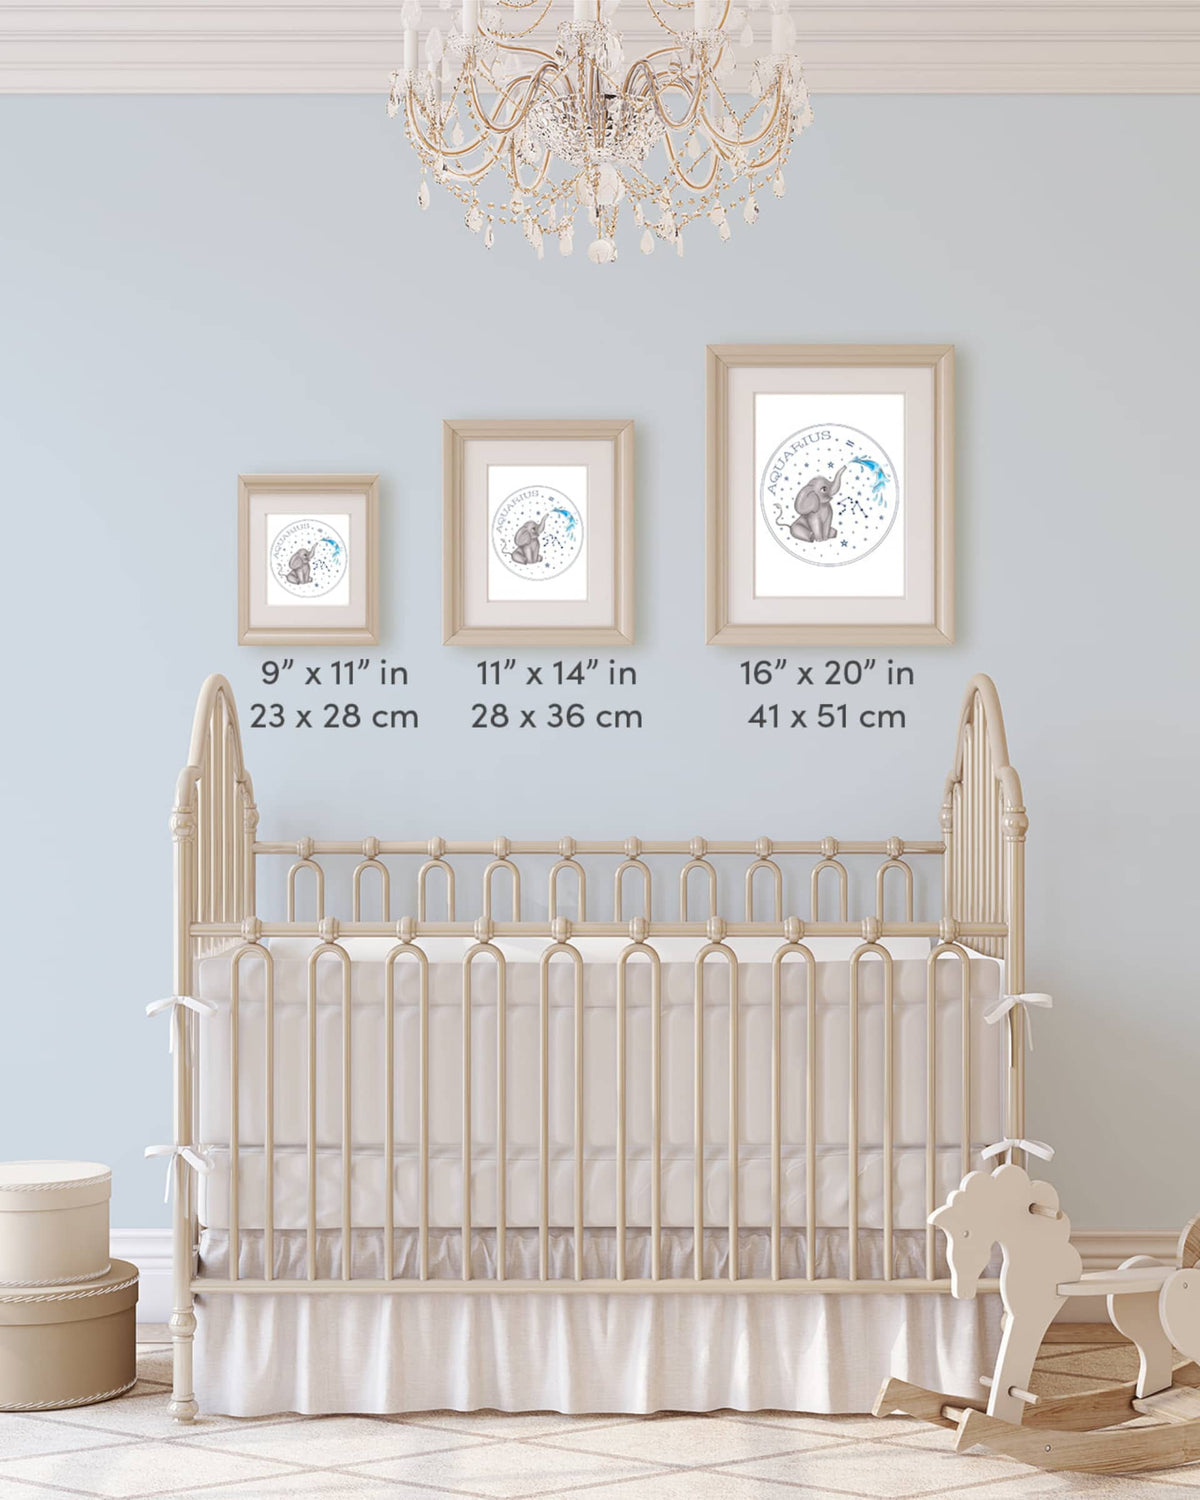 Nursery decor hand drawn zodiac baby animal wall art poster framed example